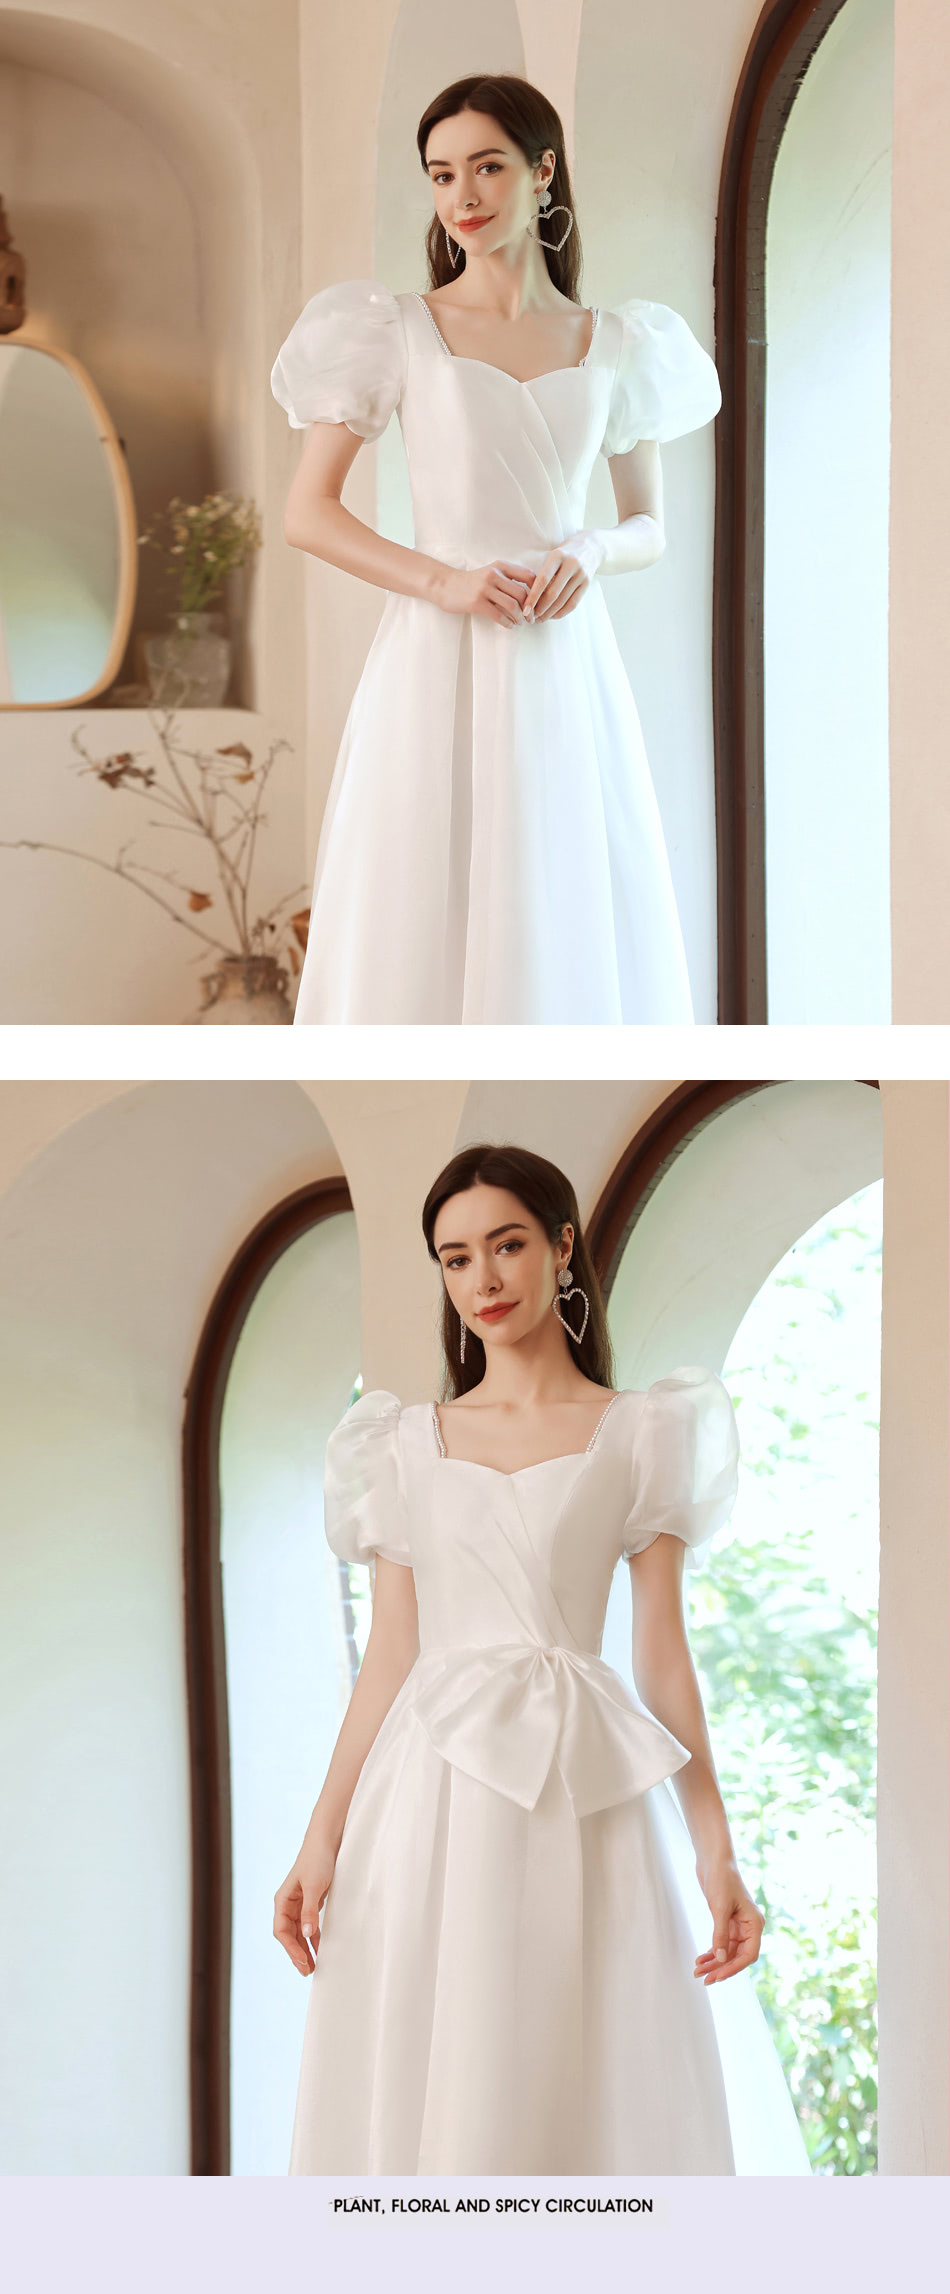 White-Short-Puff-Sleeve-Prom-Formal-Ball-Gown-Evening-Dress10.jpg